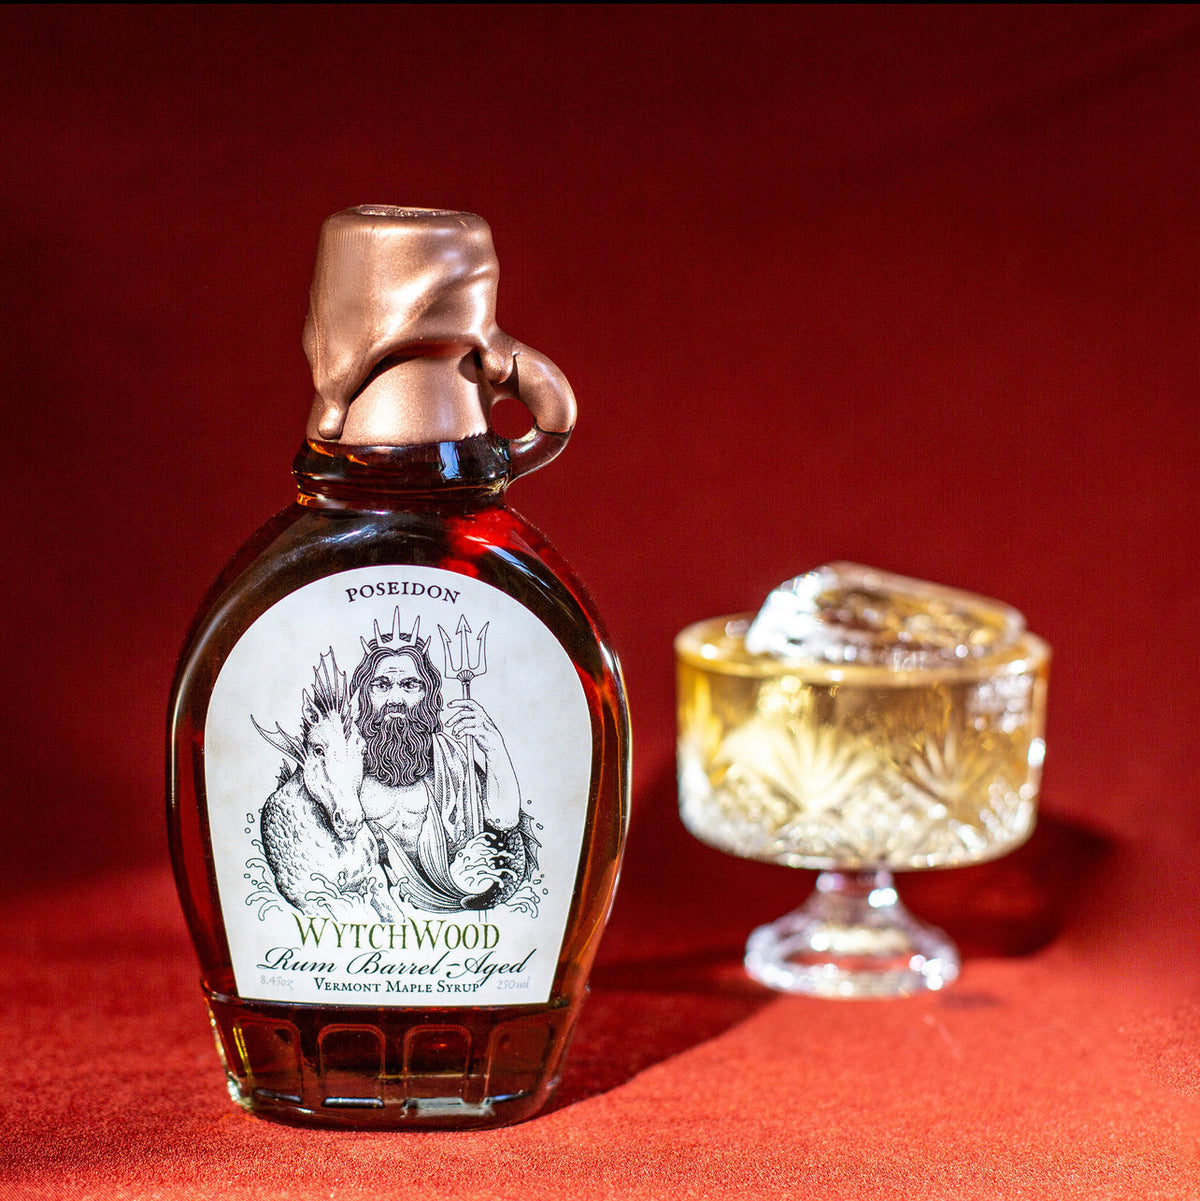 Poseidon: Rum Barrel-Aged Maple Syrup